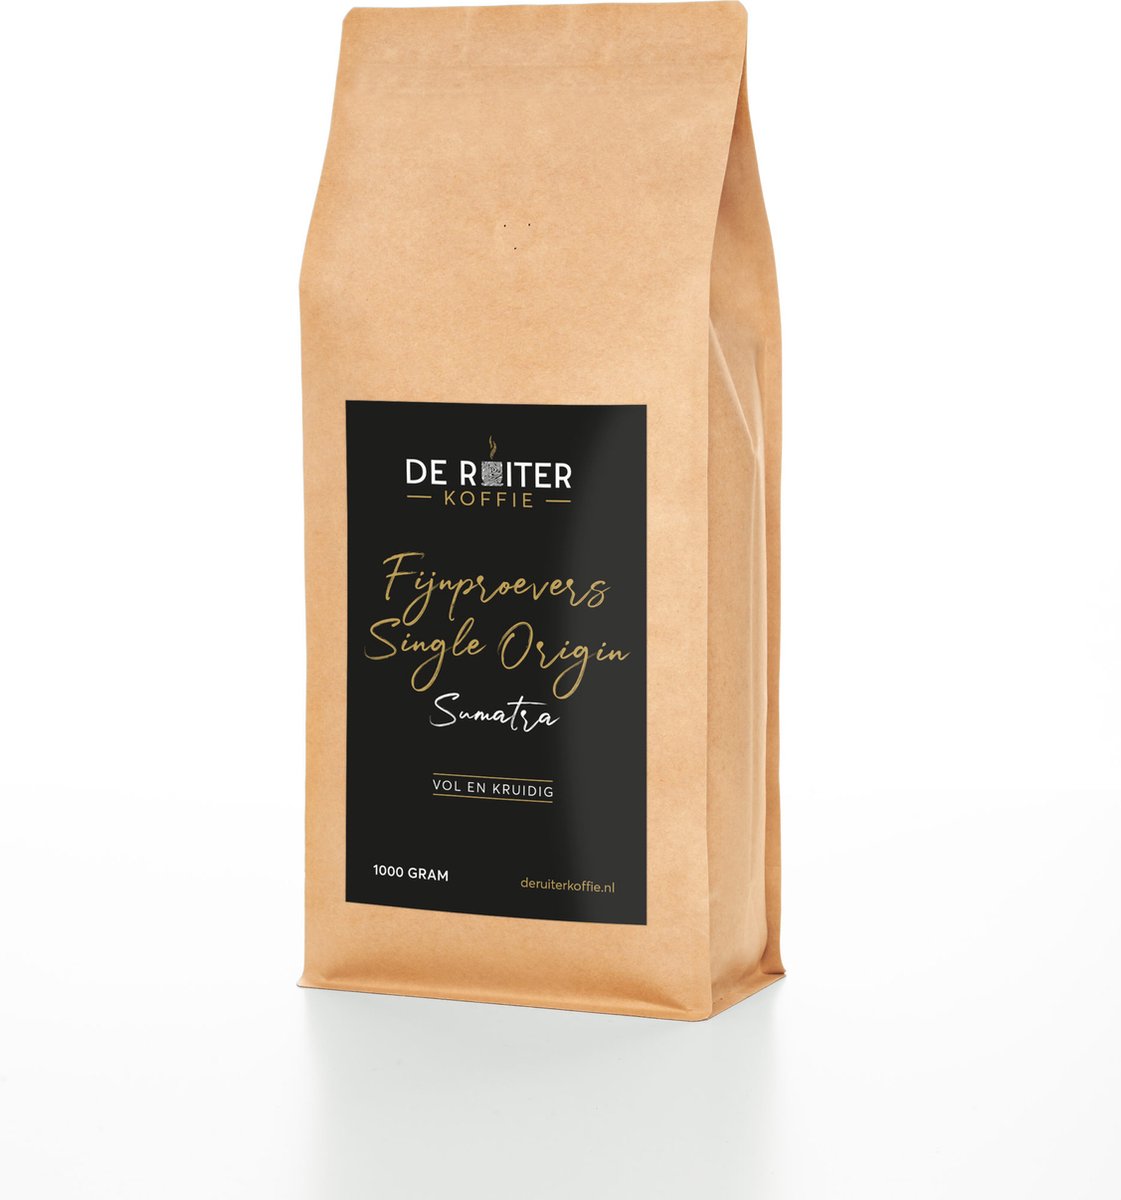 De Ruiter Koffie - Verse koffiebonen - Fijnproevers Single Origin, Sumatra - 1000 gram - Hele koffiebonen